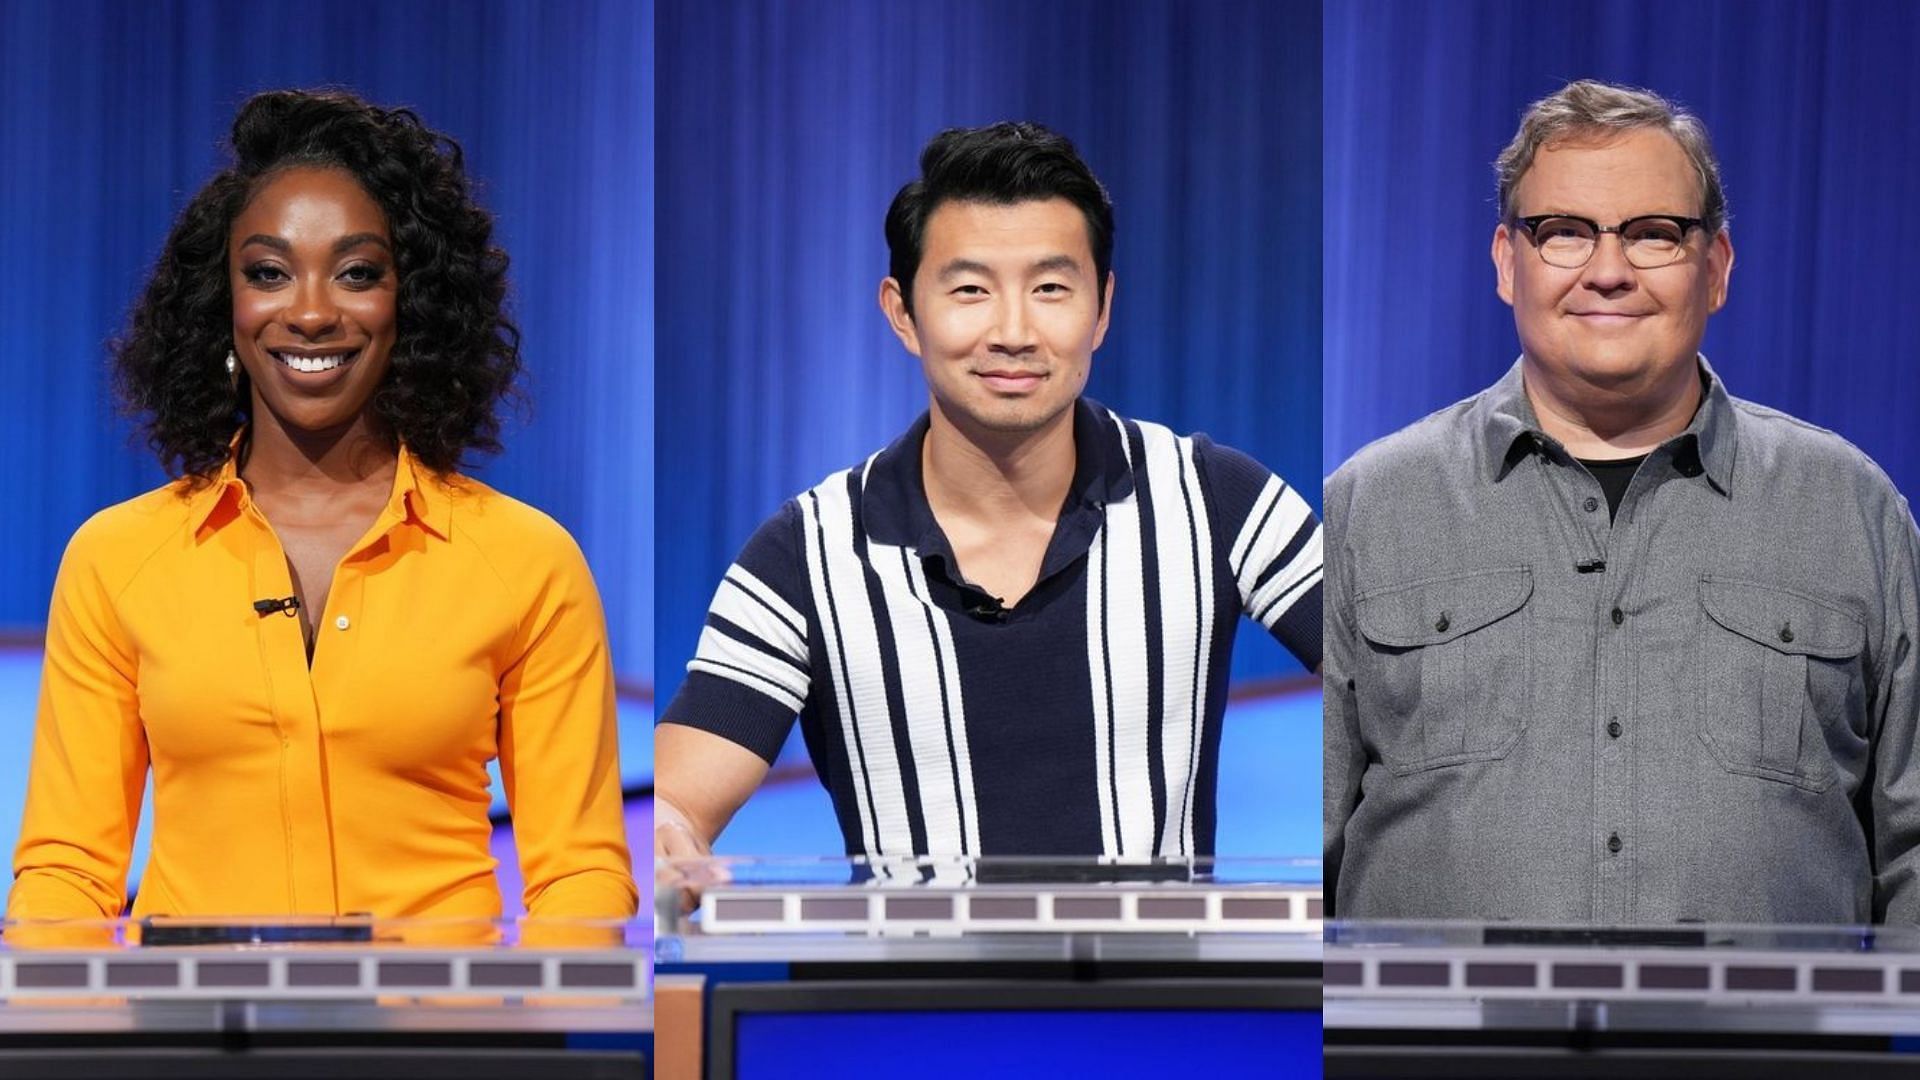 Celebrity Jeopardy! Episode 1 welcomed Ego Nwodim, Simu Liu, and Andy Richter